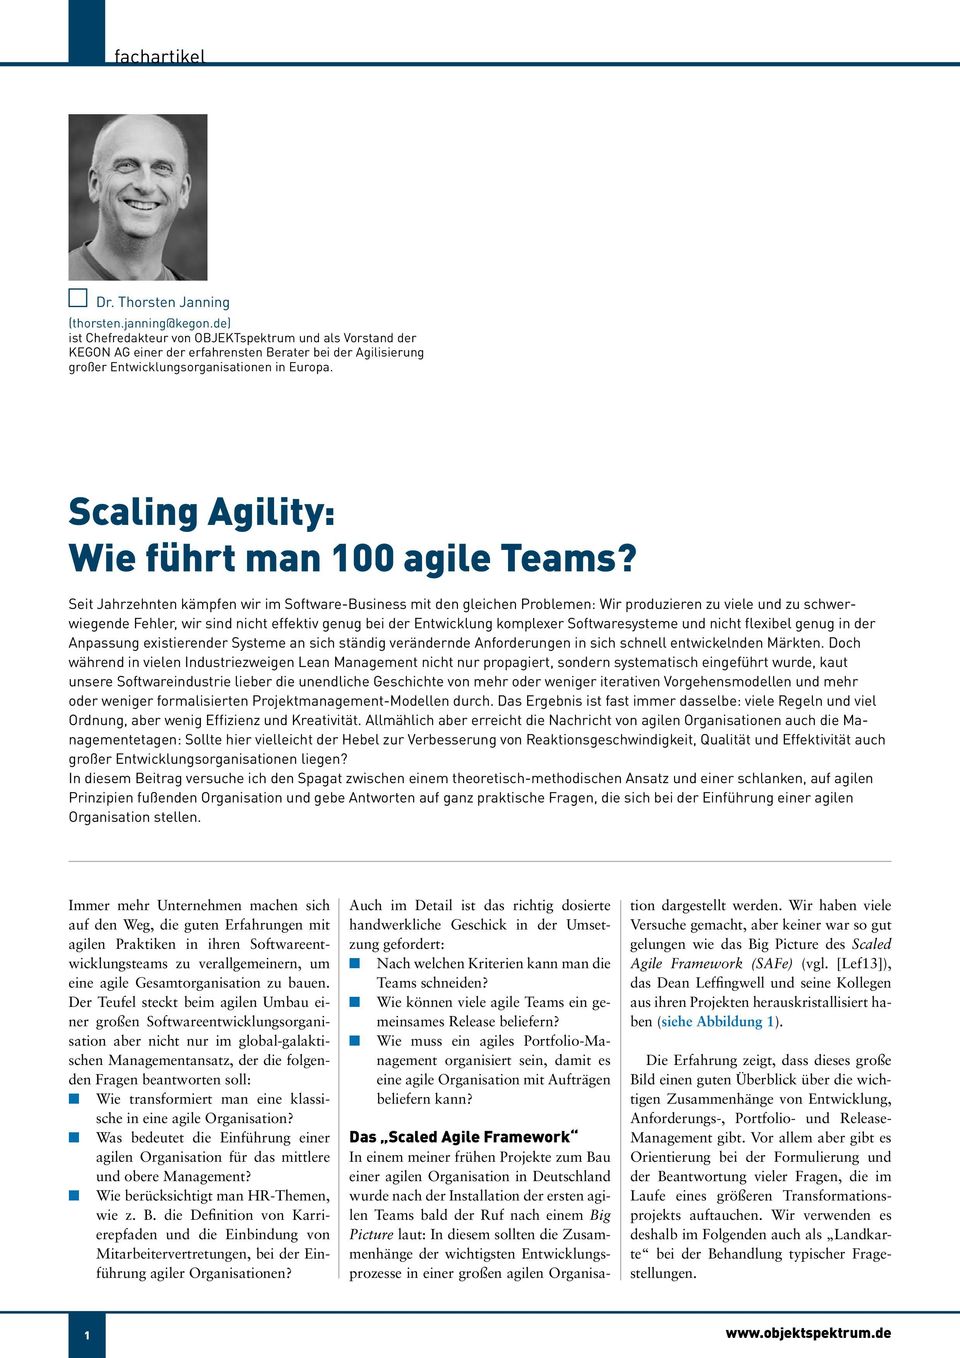 Scaling Agility: Wie führt man 100 agile Teams?